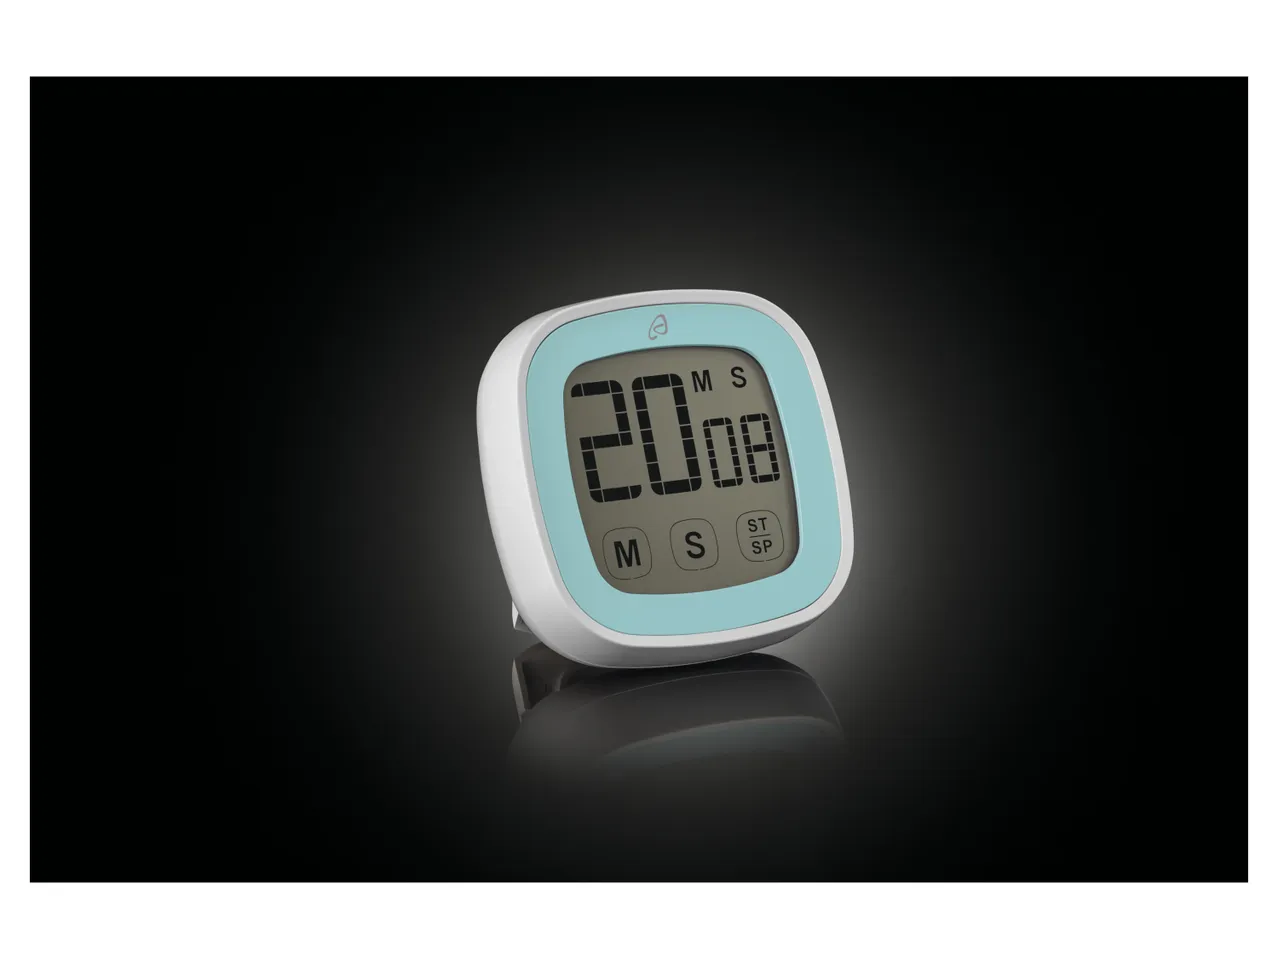 Timer digitale Auriol, prezzo 3.99 EUR 
Timer digitale 
- Dimensioni 7,5 x 7,5 ...